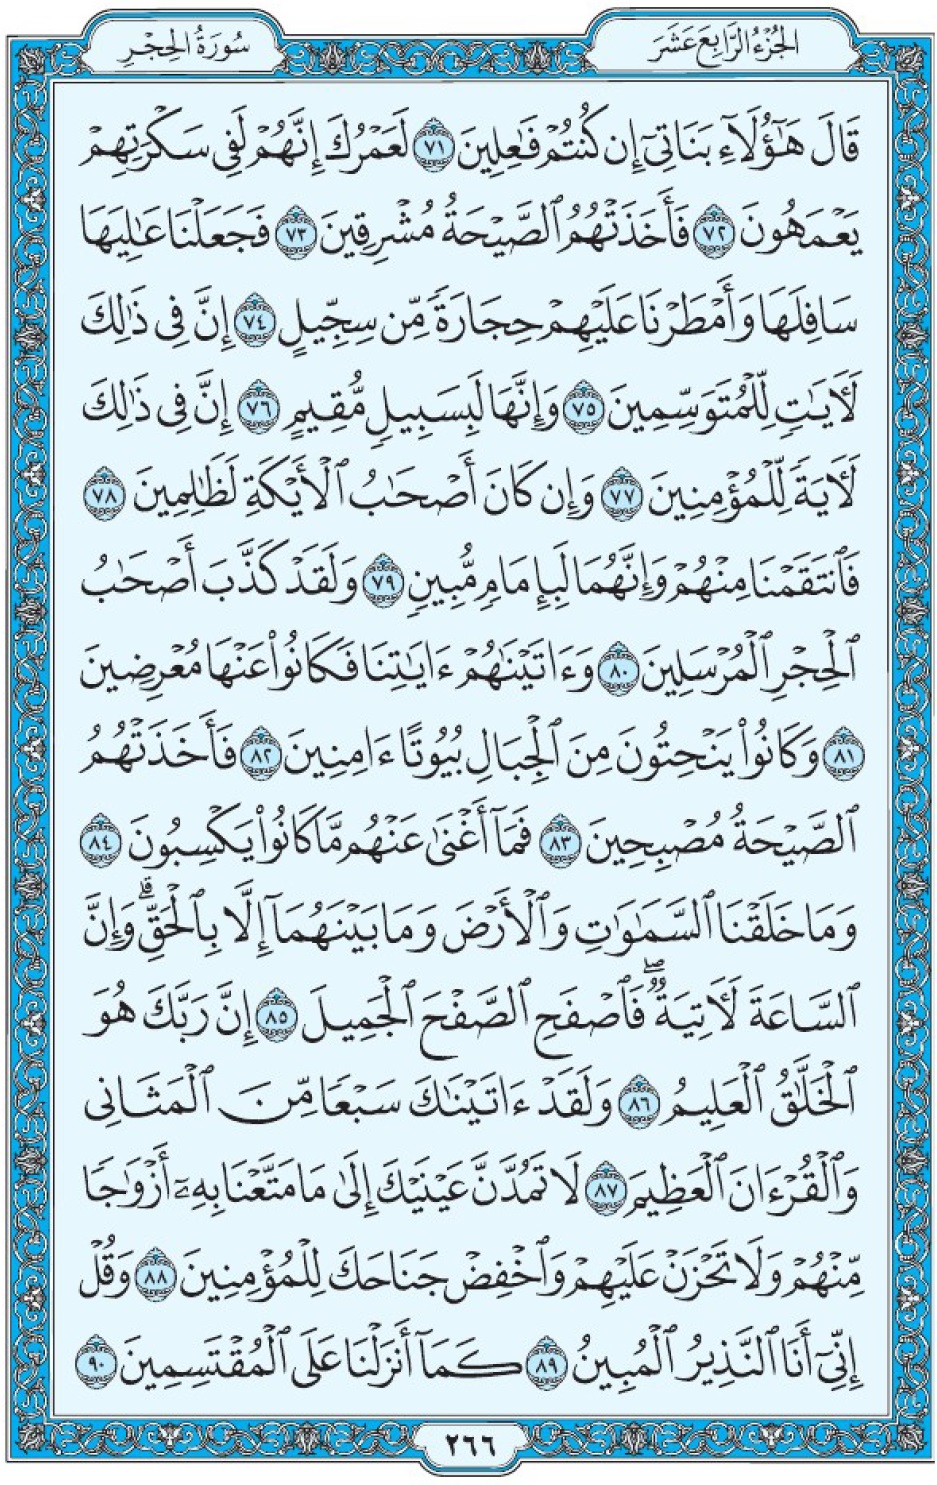 Коран Мединский мусхаф страница 266, Аль-Хиджр, аят 71-90